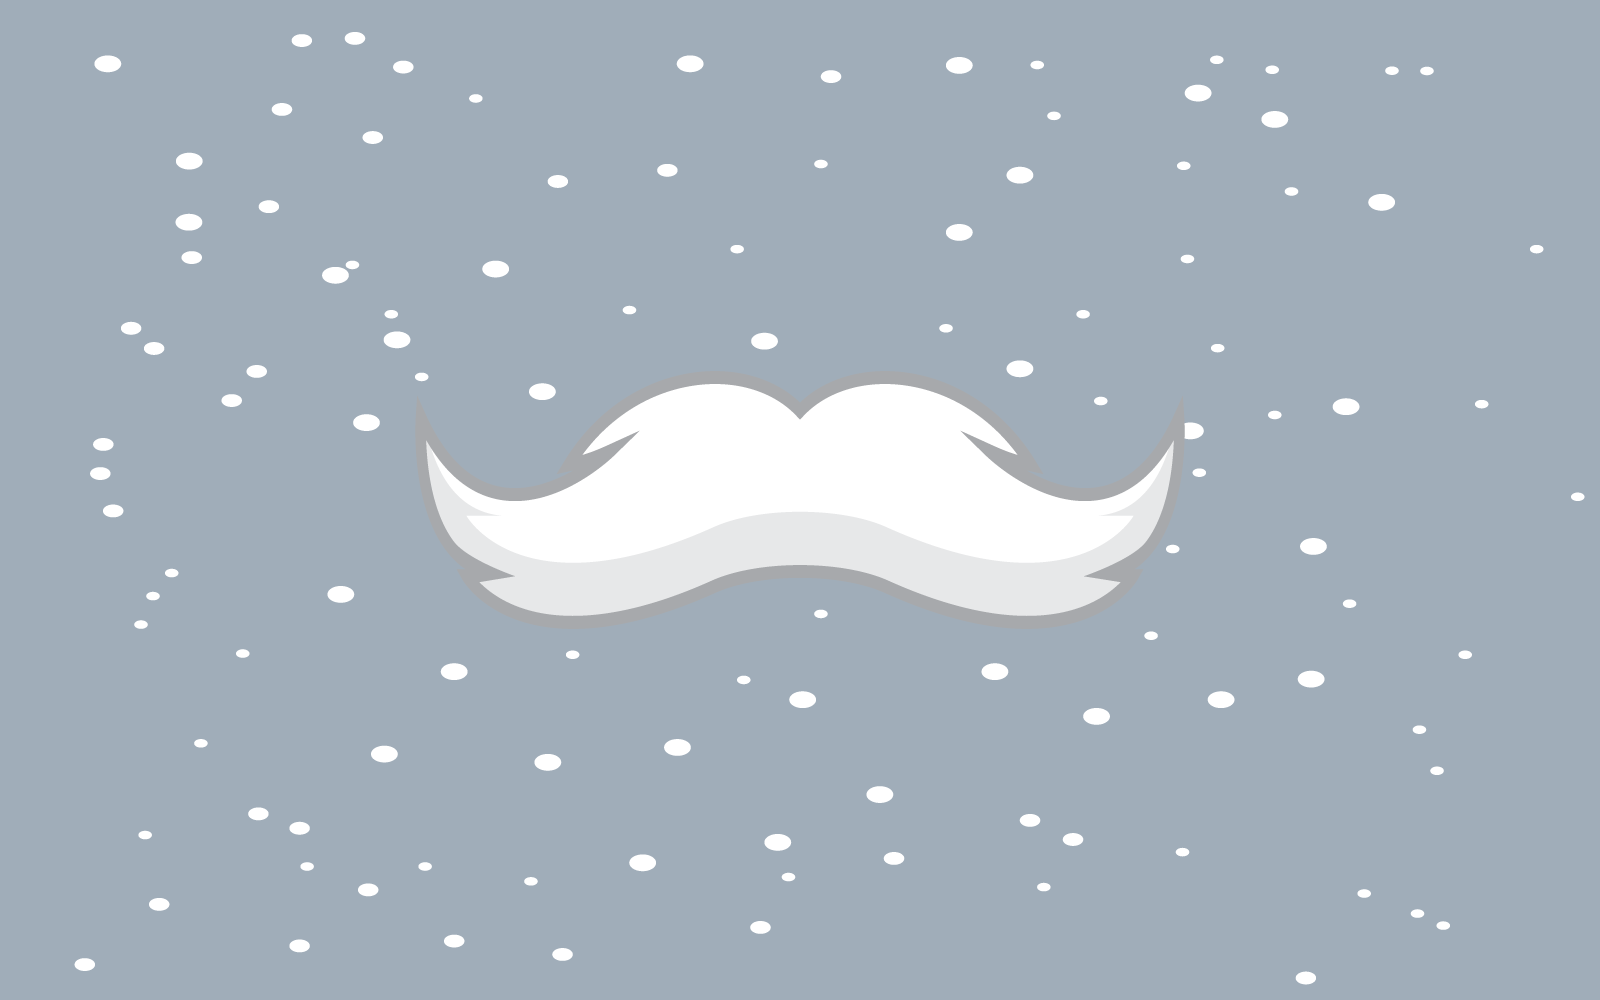 Santa Mustache and beard cartoon character icon design